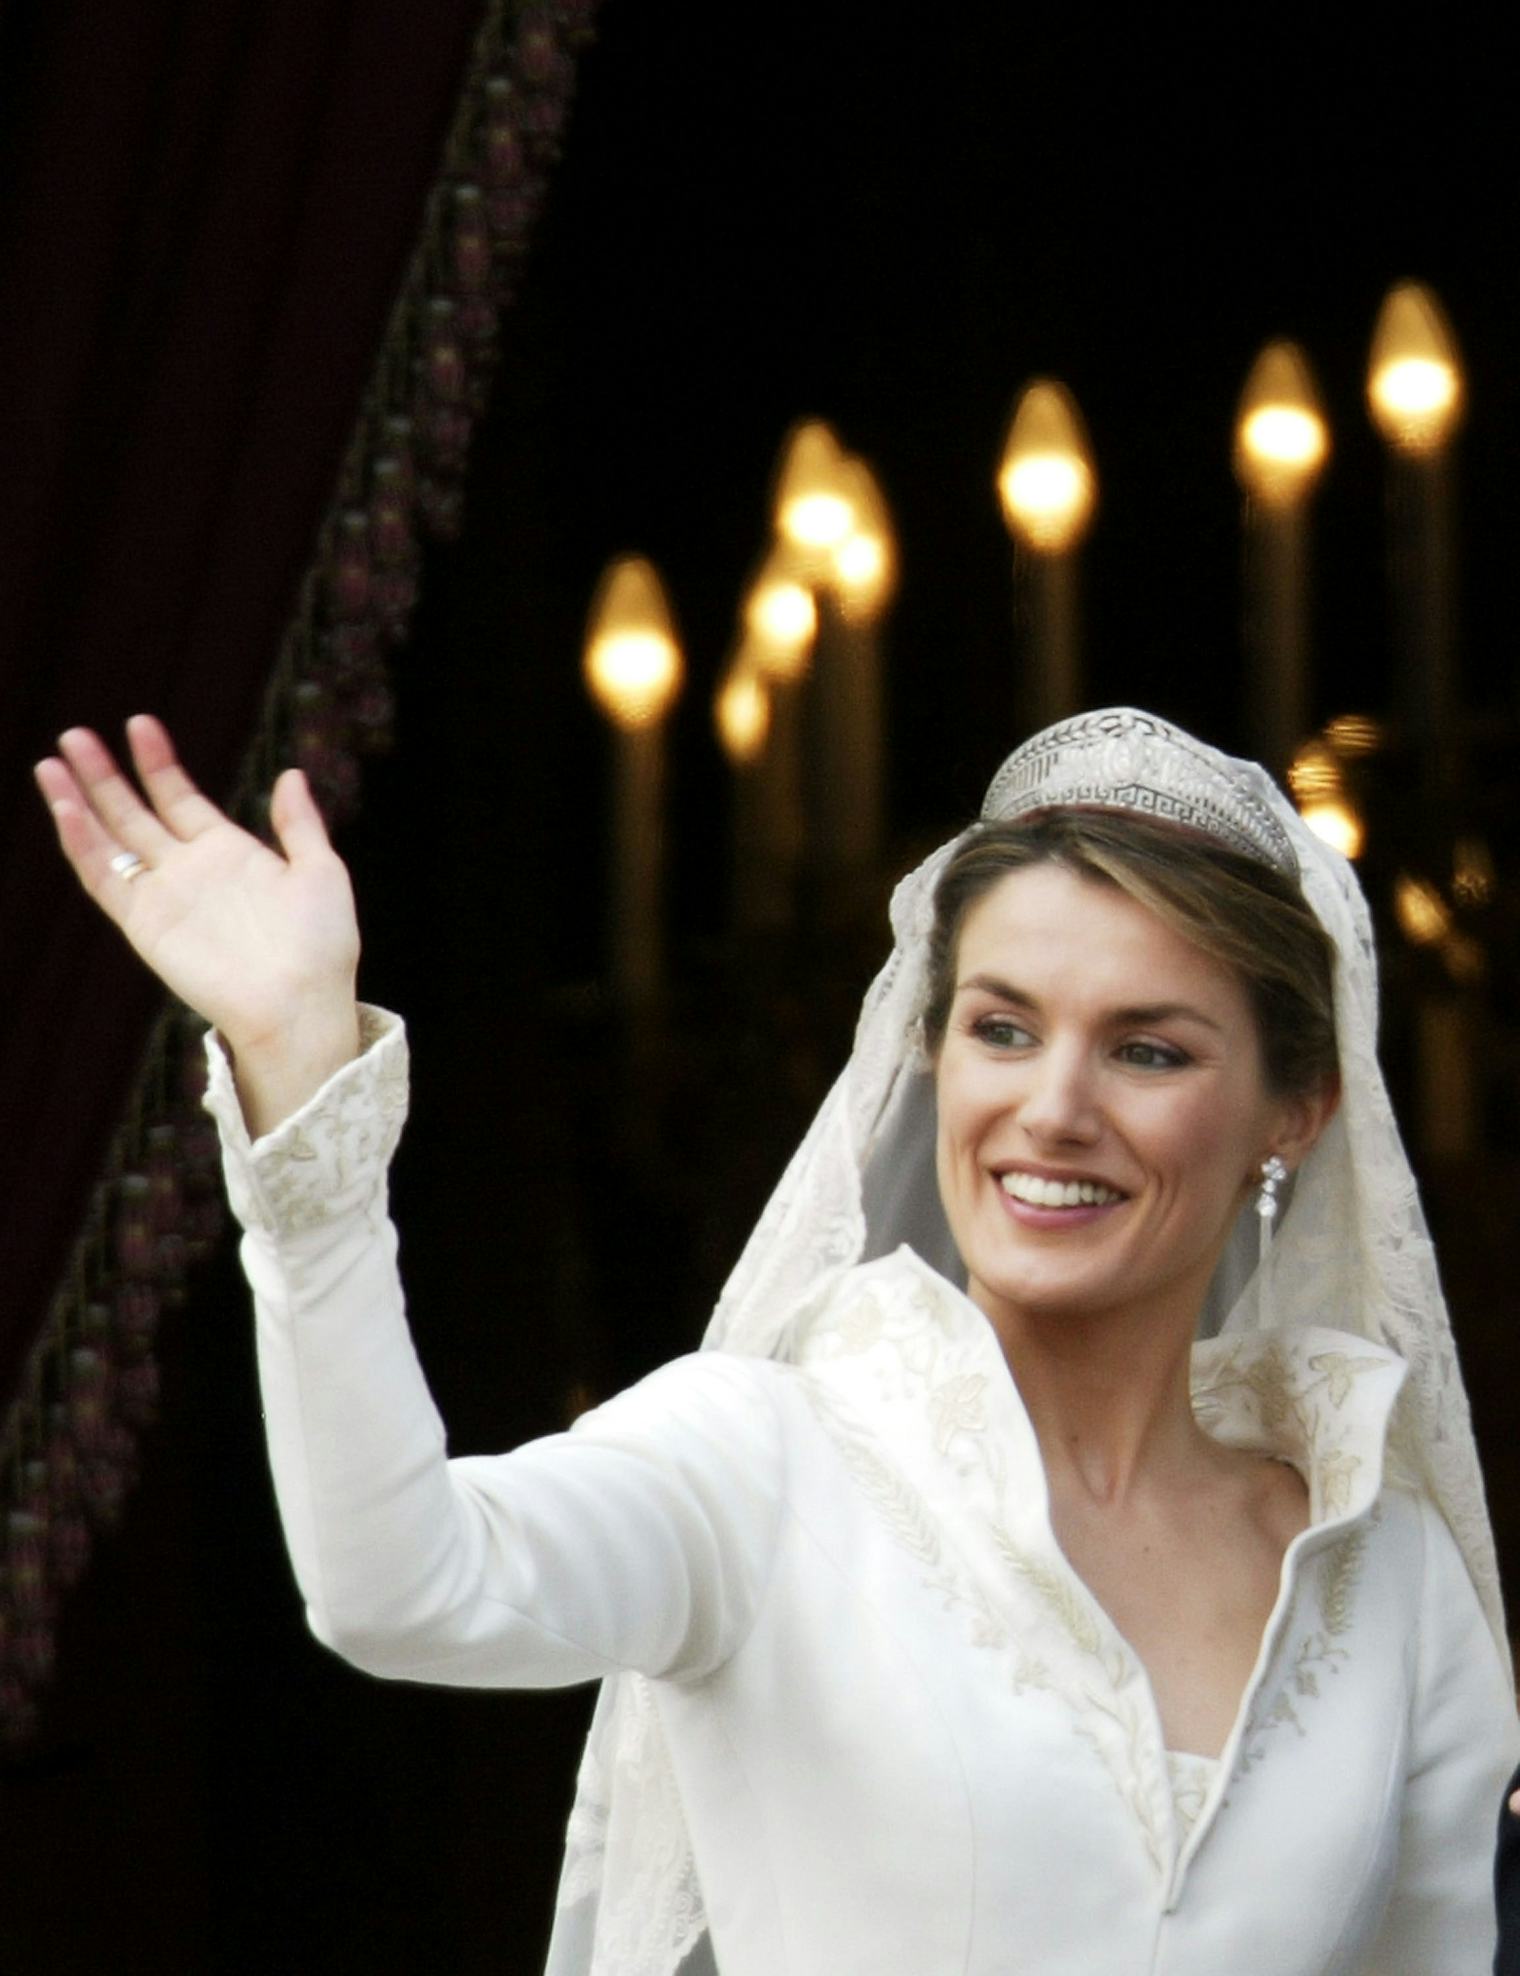 Queen Letizia’s Engagement Ring Is Equal Parts Timeless & Unique